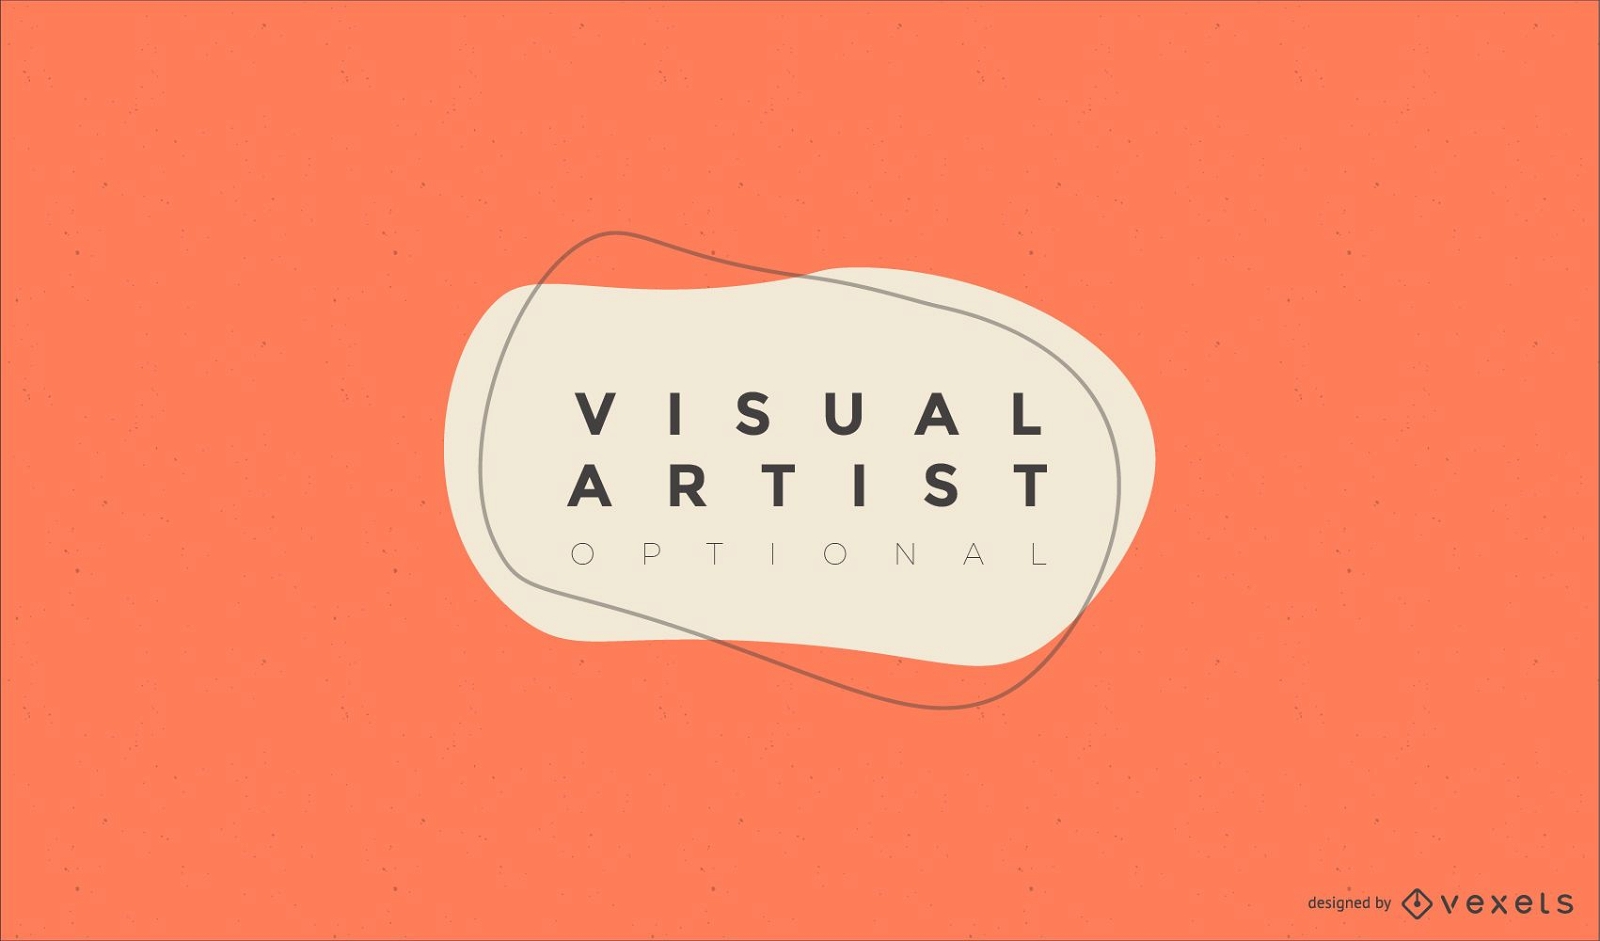 Diseño de logo de artista visual